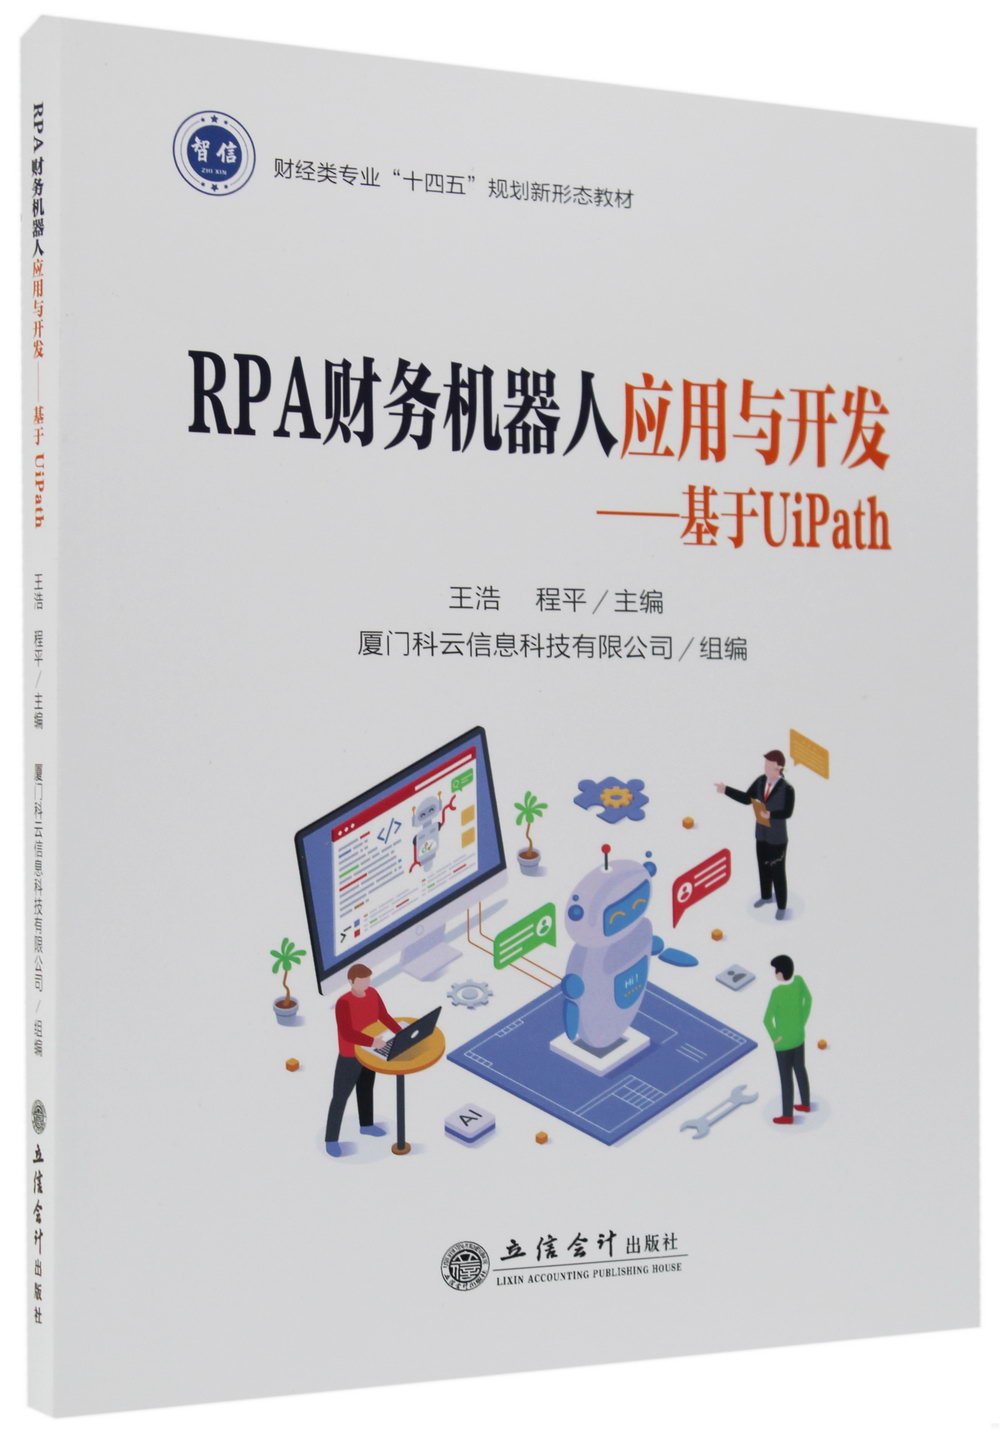 RPA財務機器人應用與開發--基於UiPath